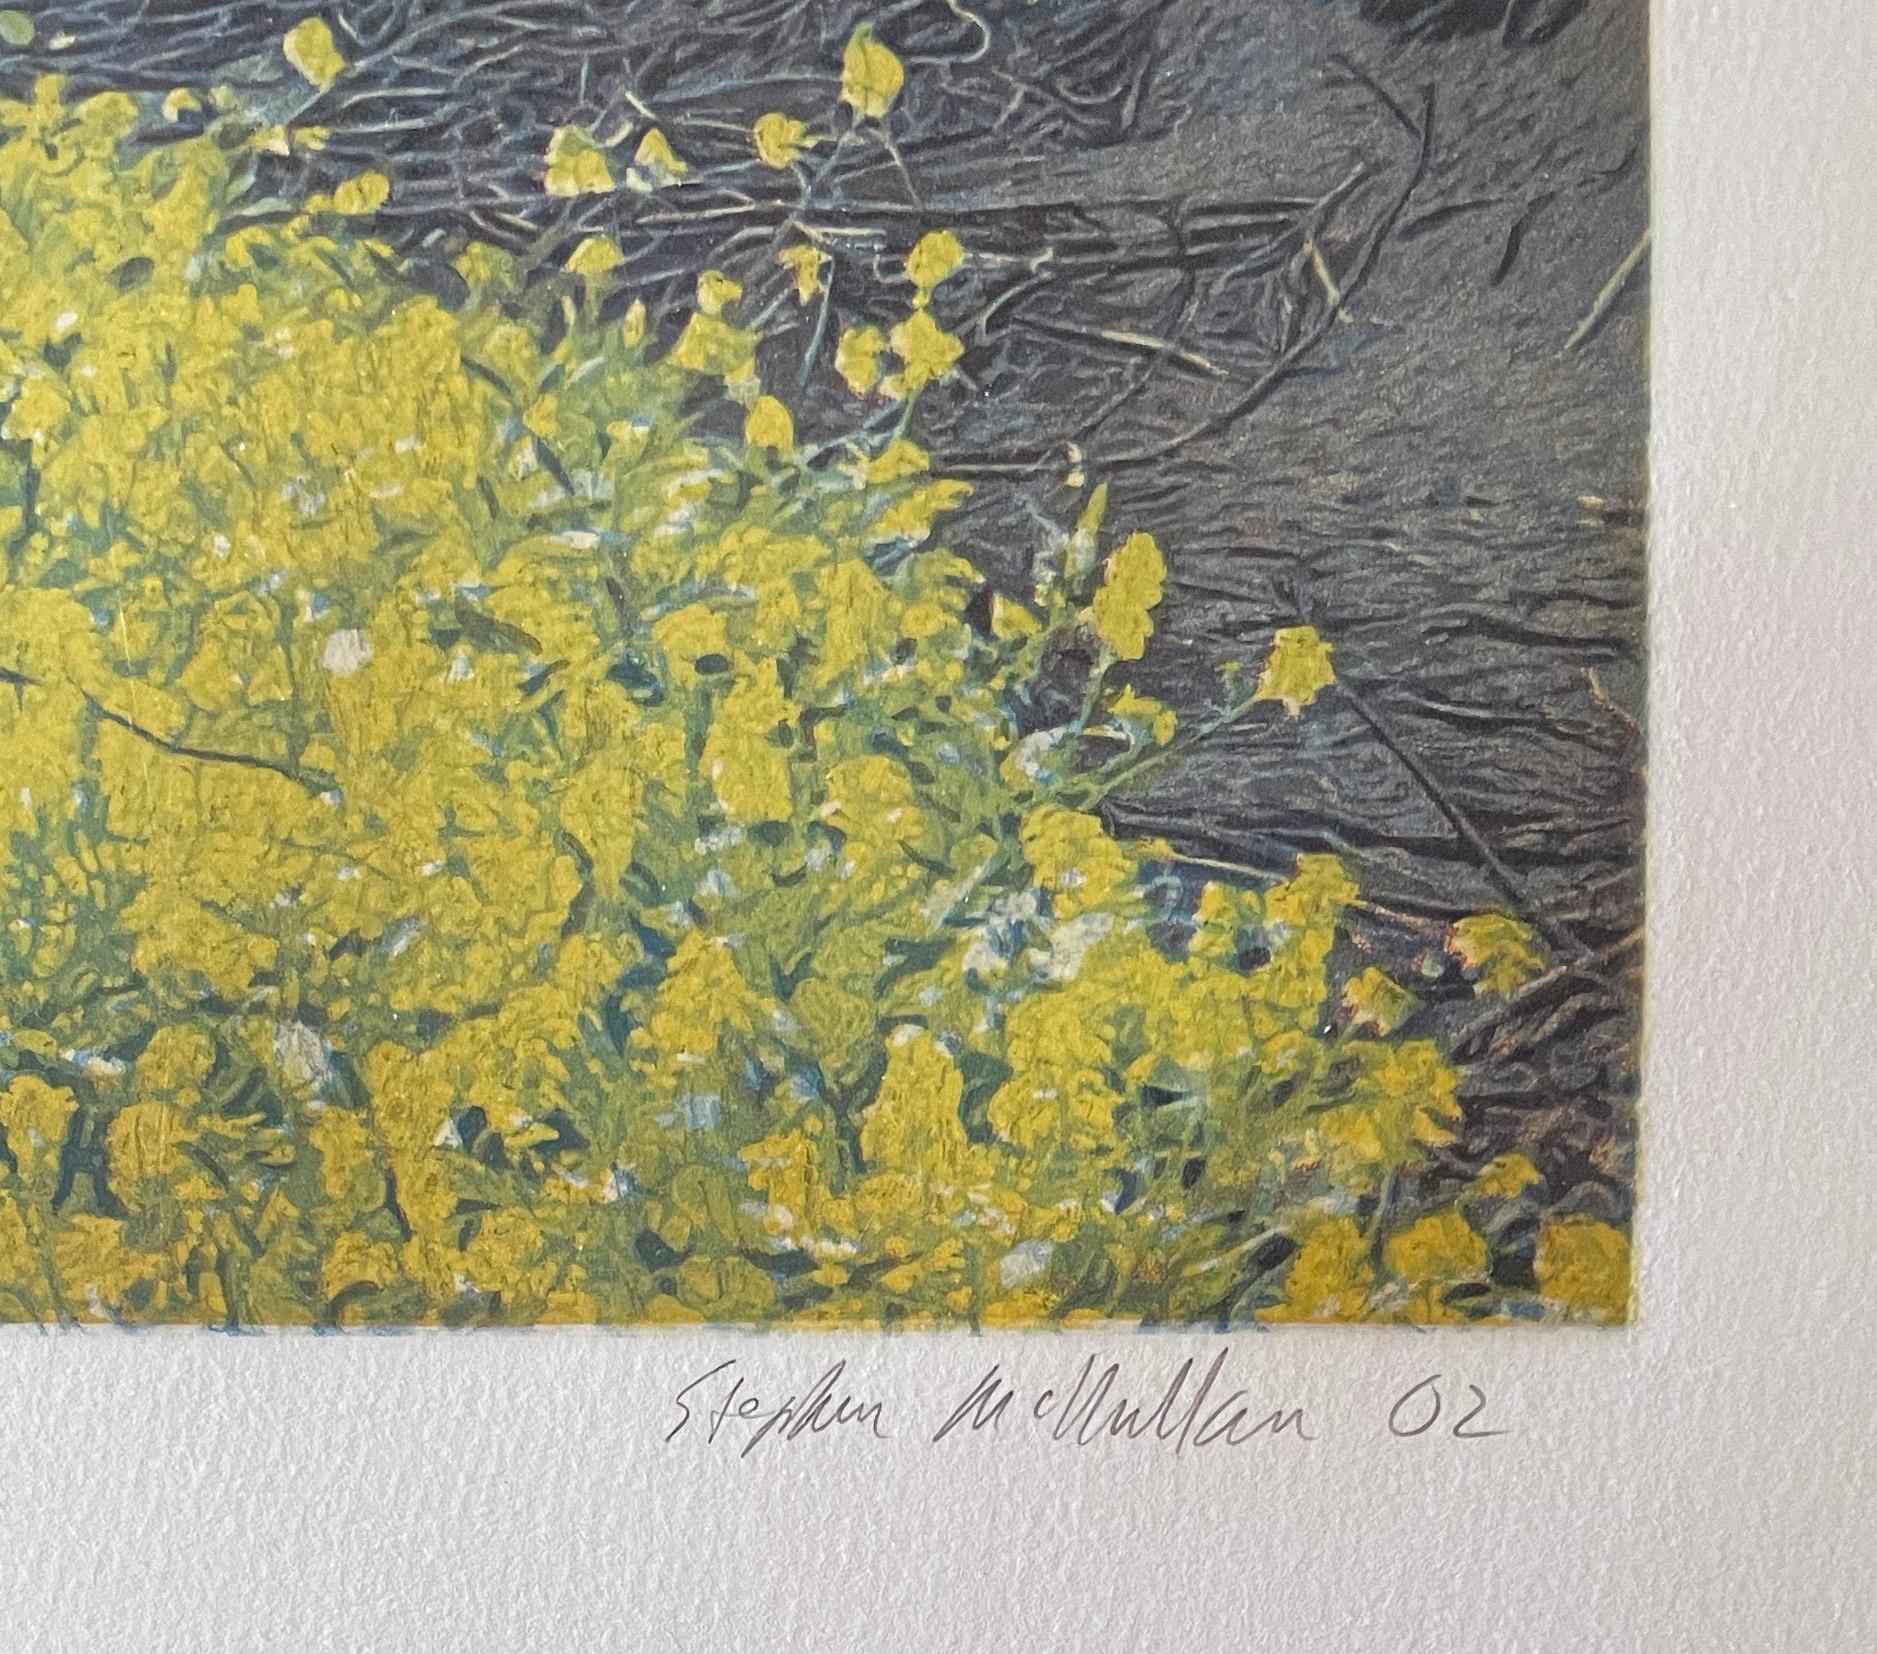 Wild Mustard, by Stephen McMillan 1